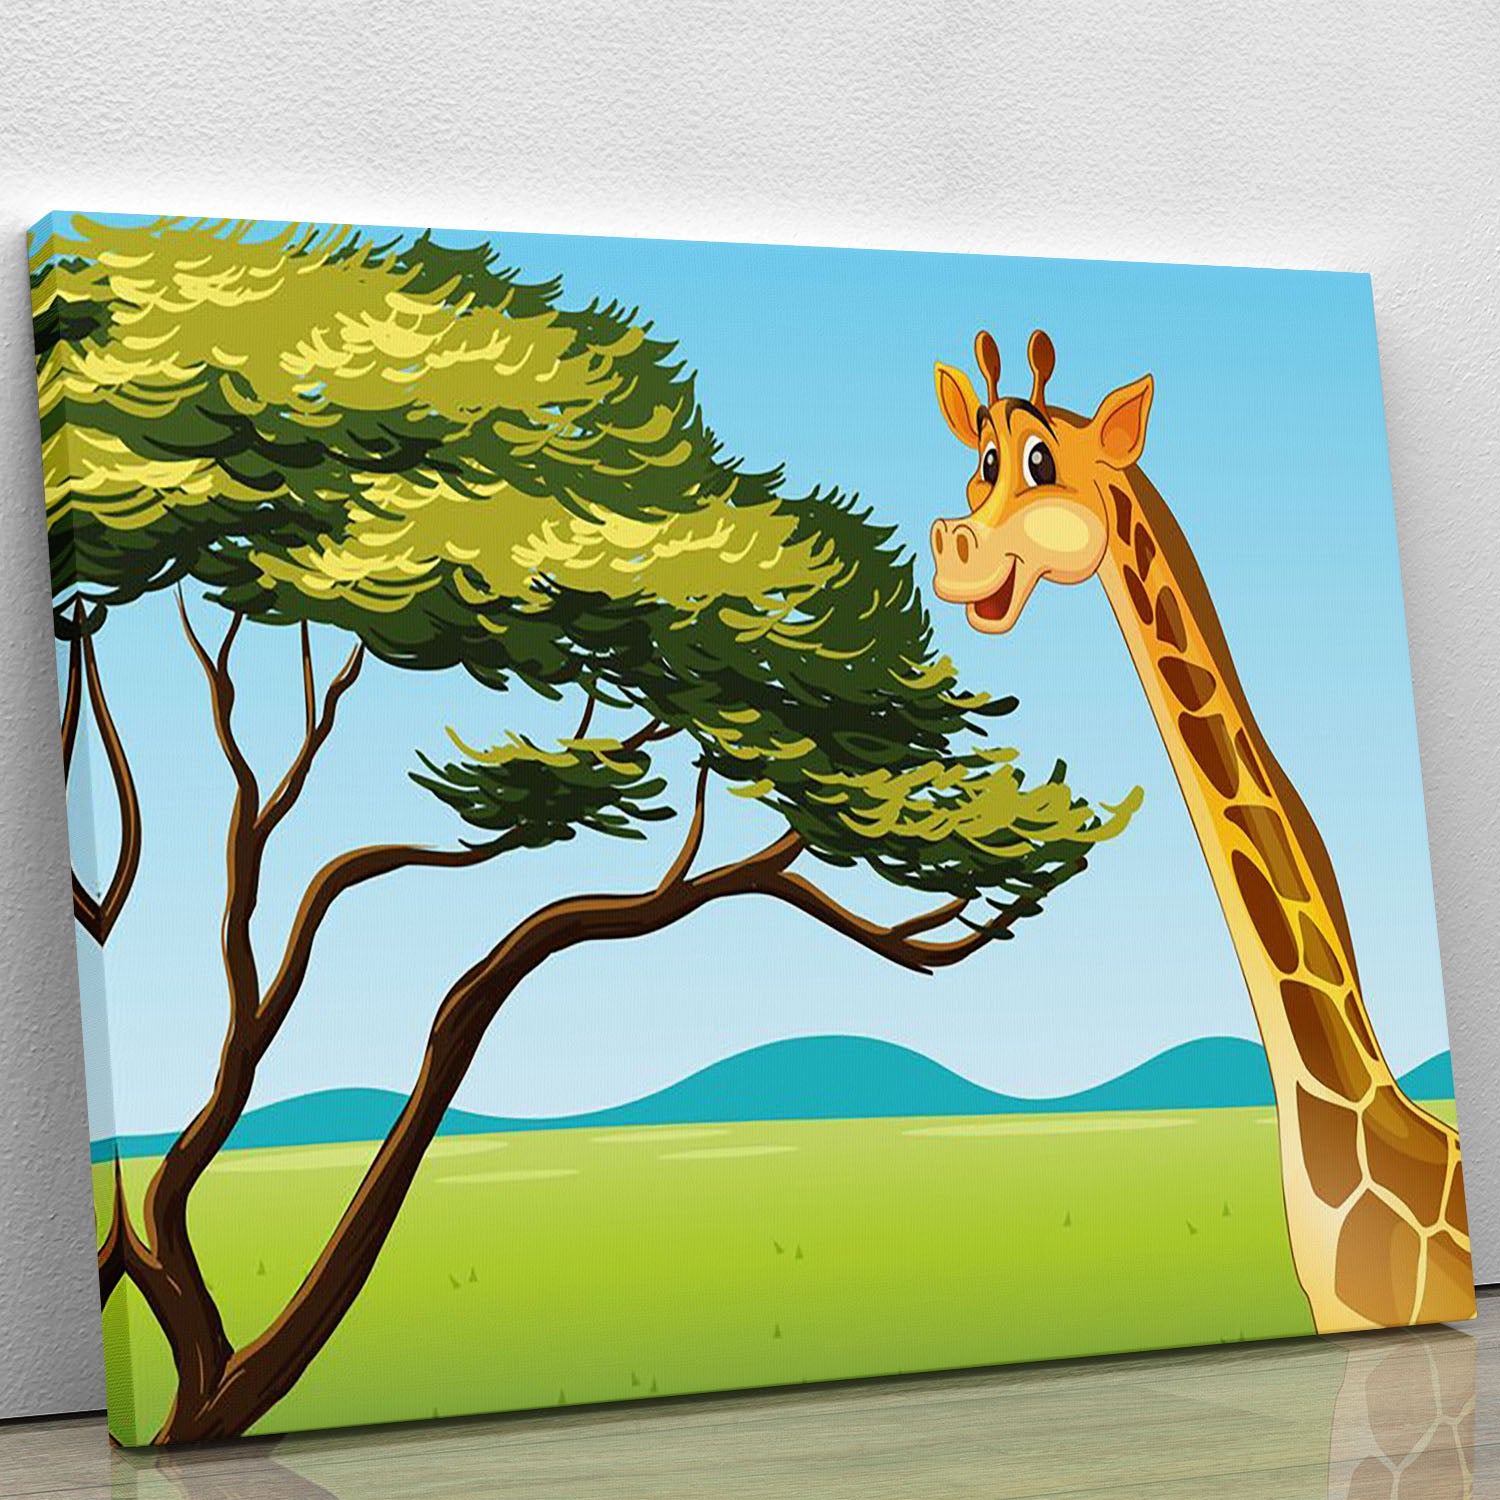 Illustration of a giraffe eating Canvas Print or Poster - Canvas Art Rocks - 1